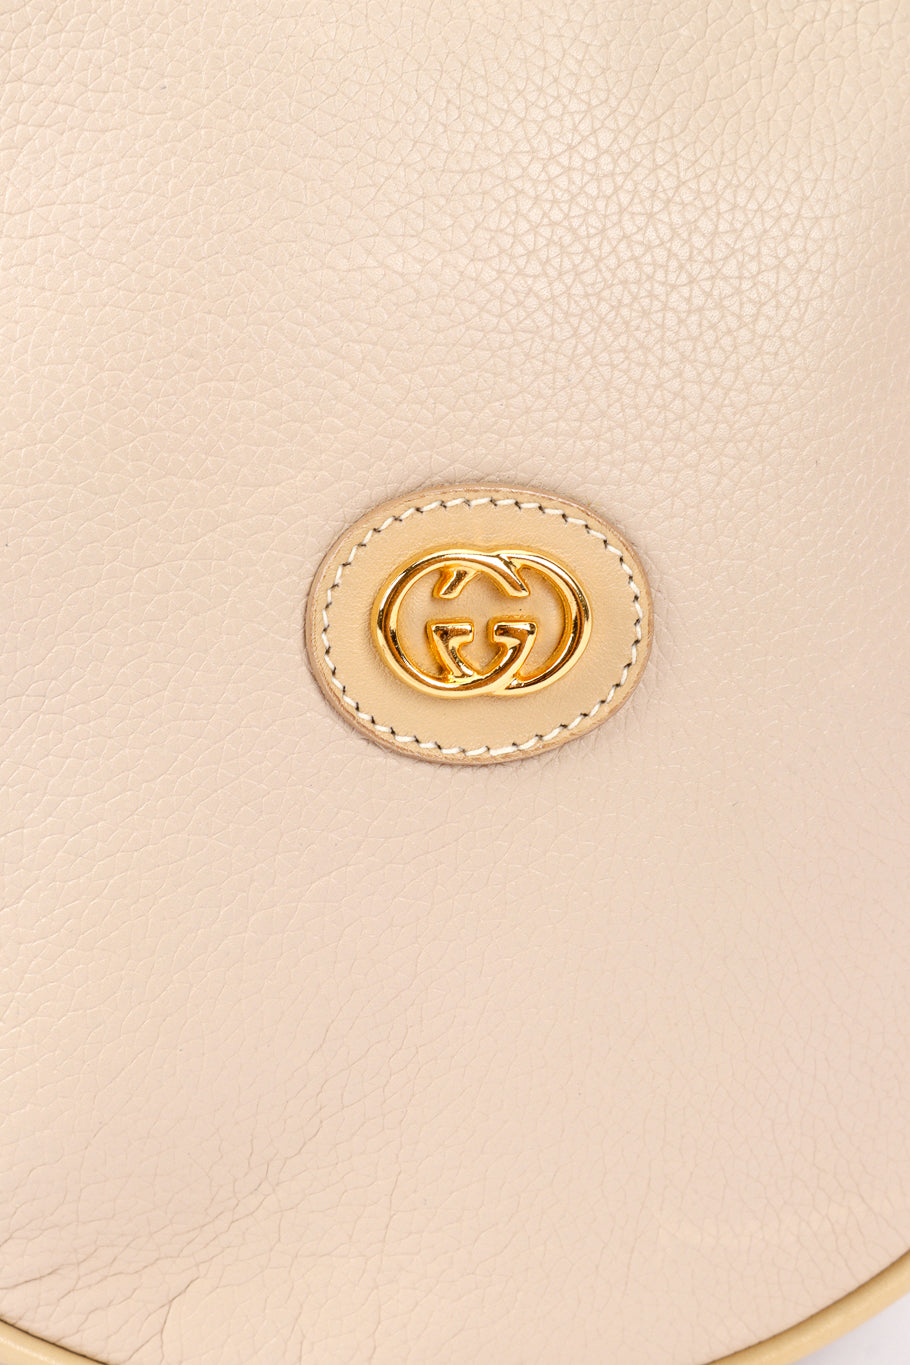 Vintage Gucci Leather Circle Bag logo charm closeup @recessla